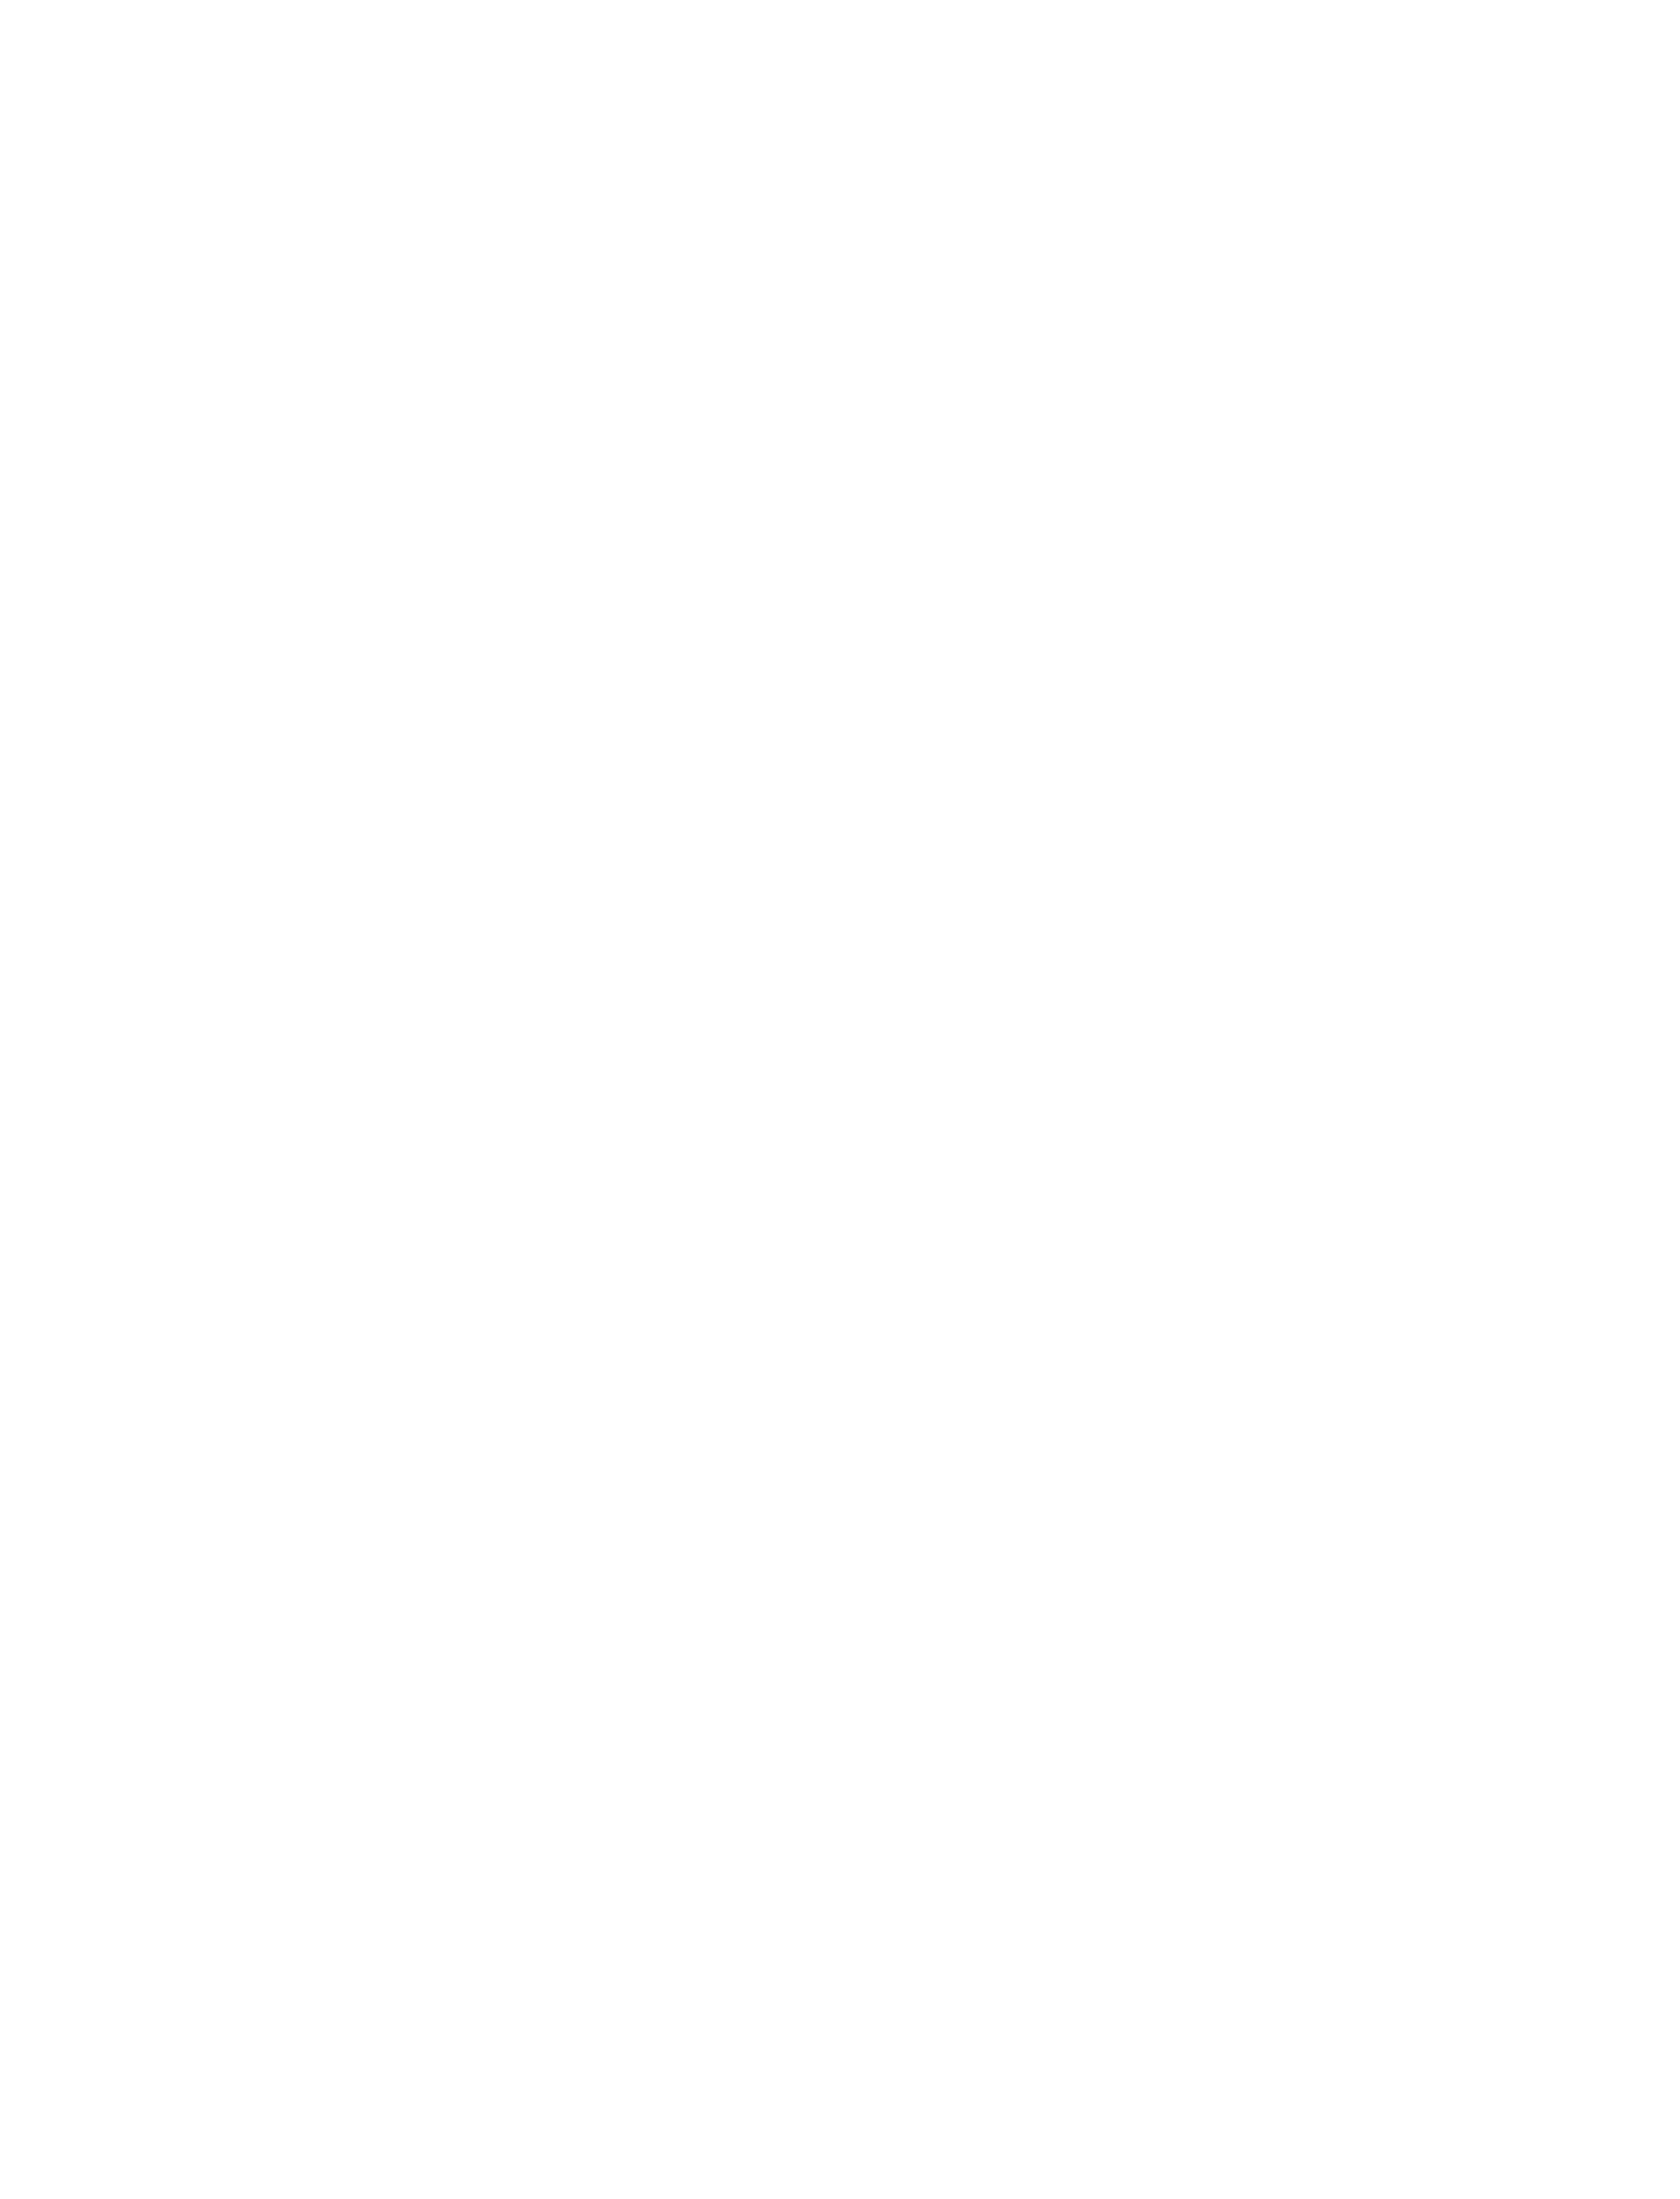 Tonic Ball